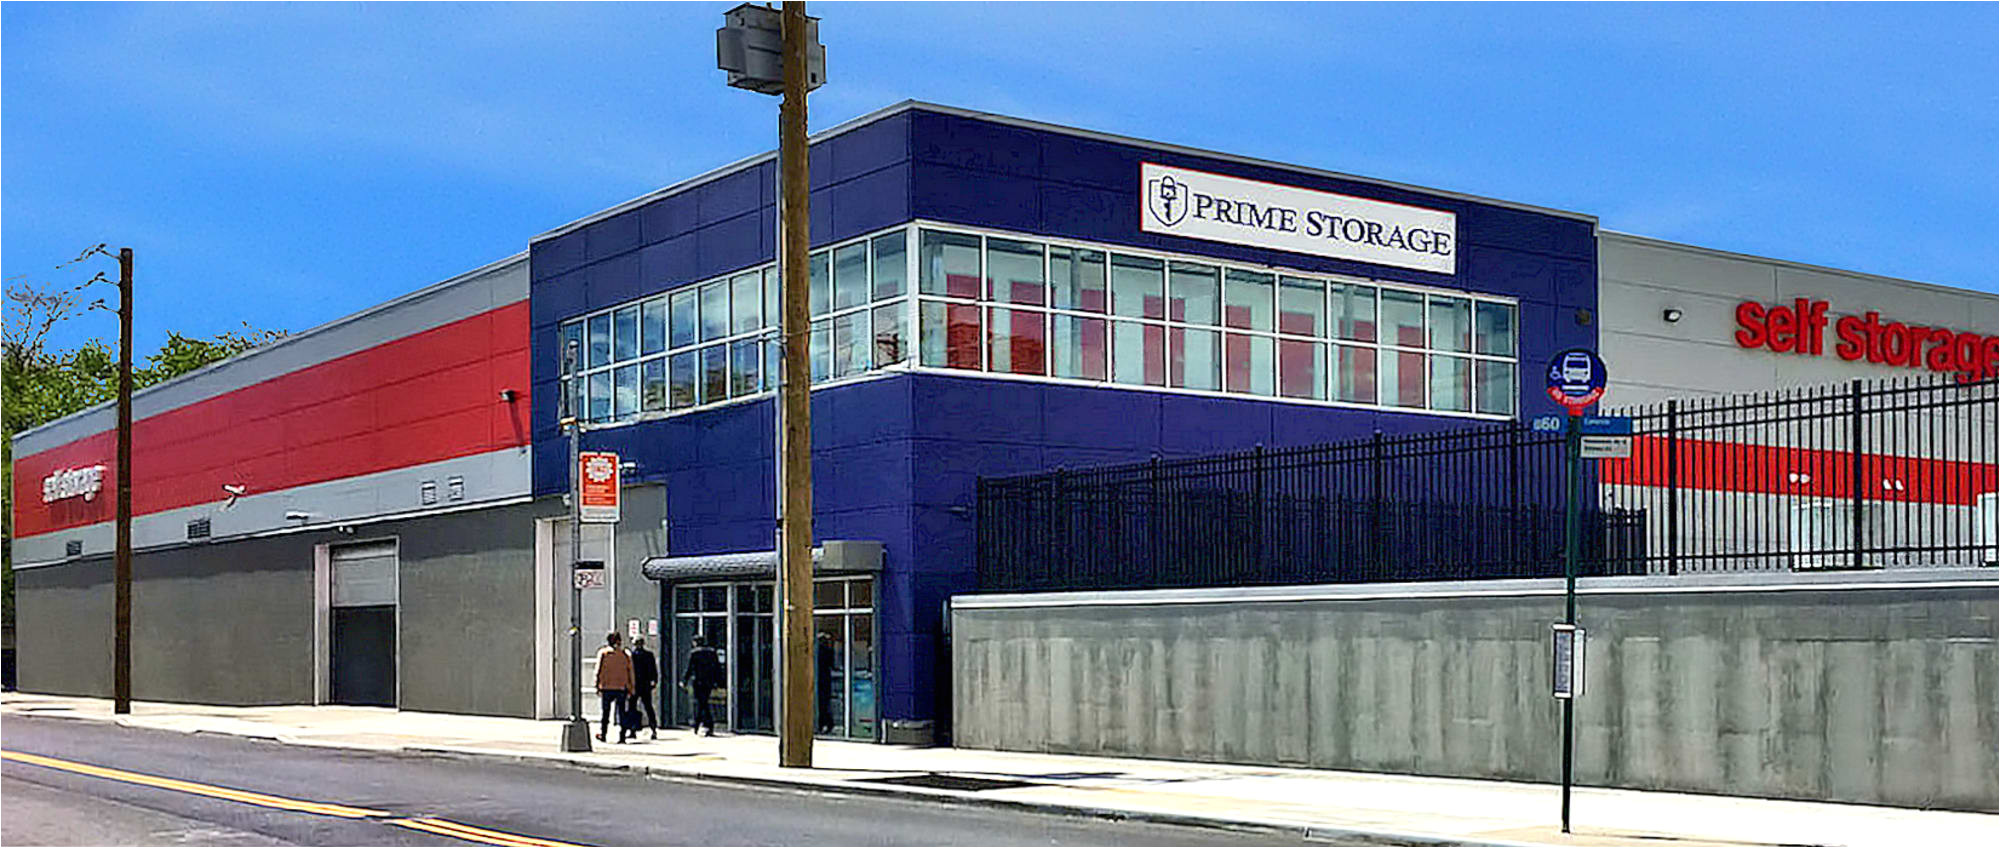 ny exterior image of prime storage in brooklyn ny